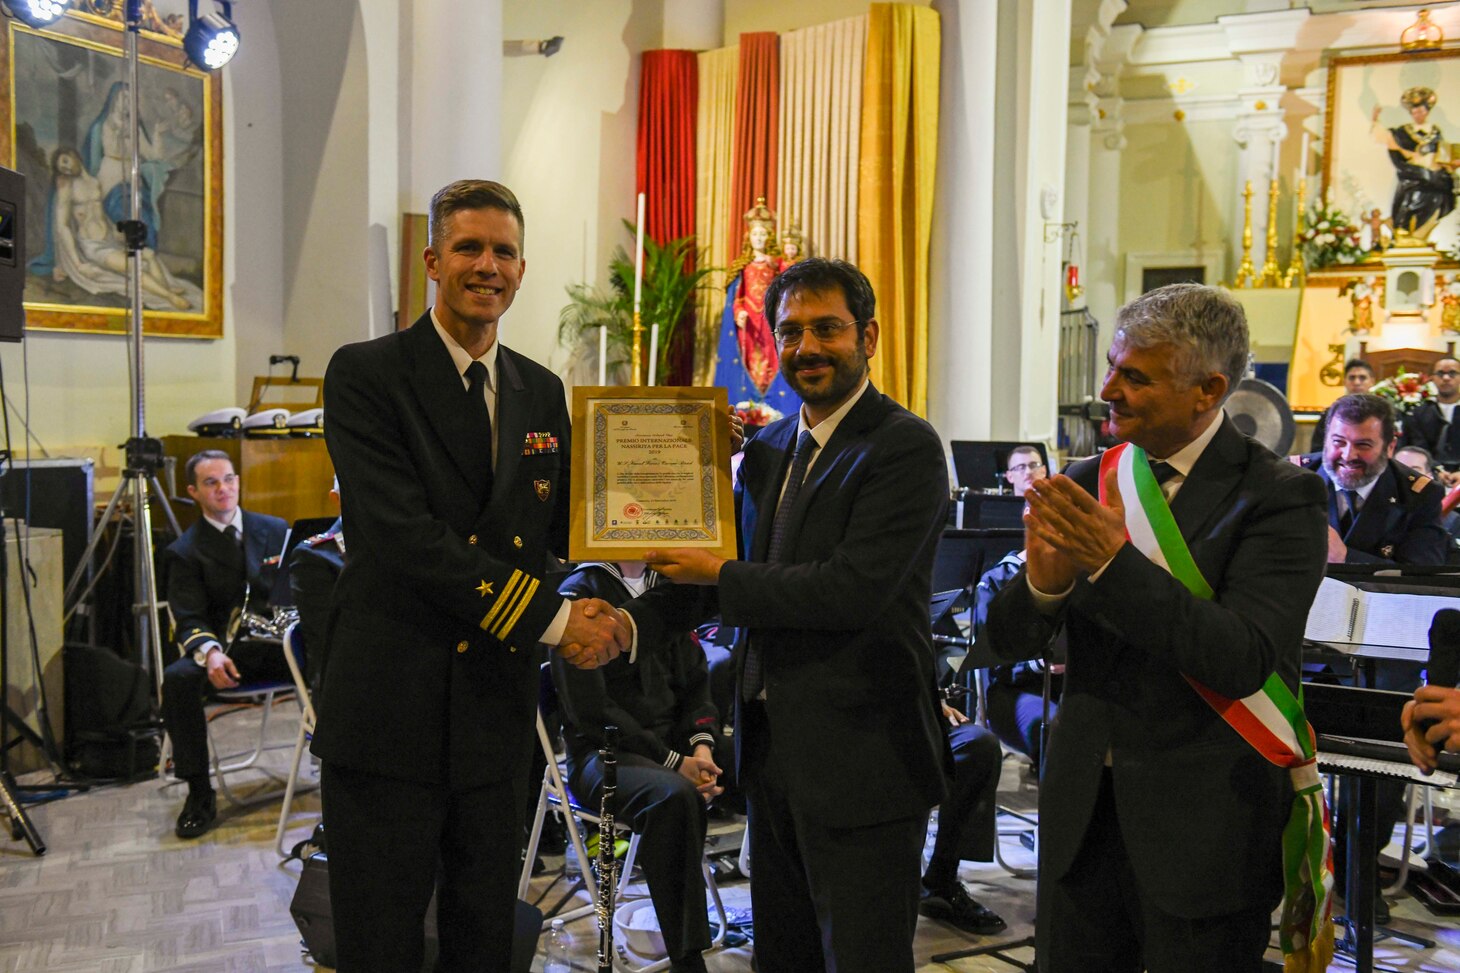 LENTICOSA, Italy; U.S. Naval Forces Europe Band; "Premio Internazionale Nassiriya per la Pace" award; Italian Undersecretary of Defense Angelo Tofalo